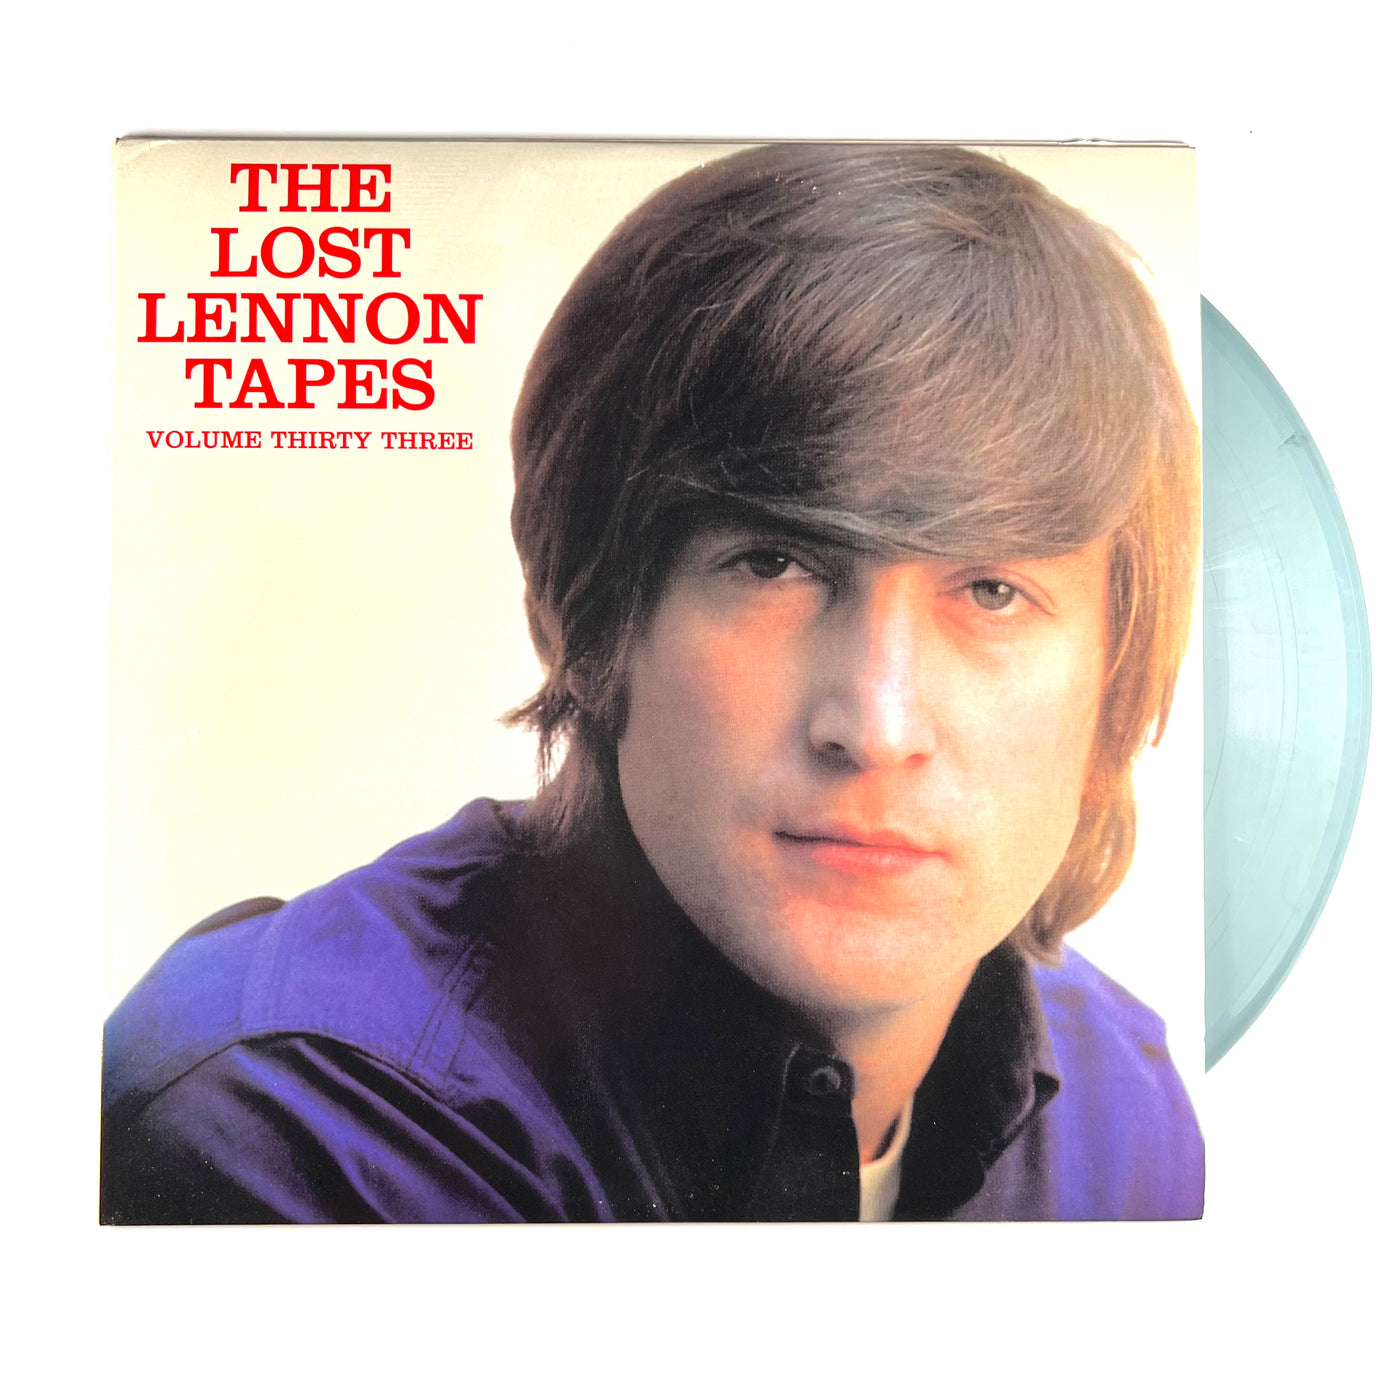 John Lennon - The Lost Lennon Tapes Volume Thirty Three